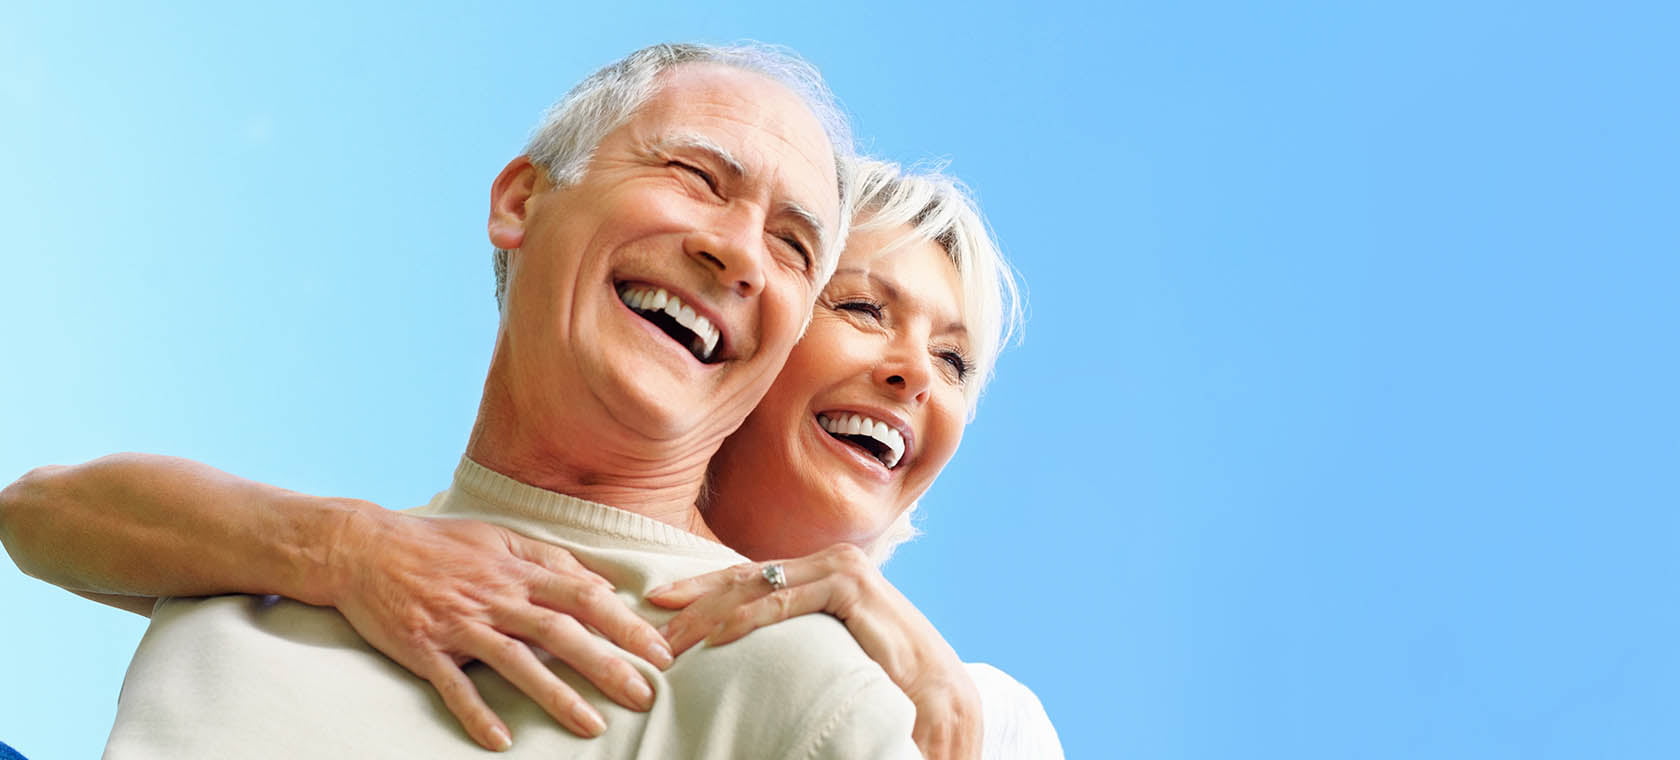 elderly couple enjoying life while deciding on senior living options for themselves